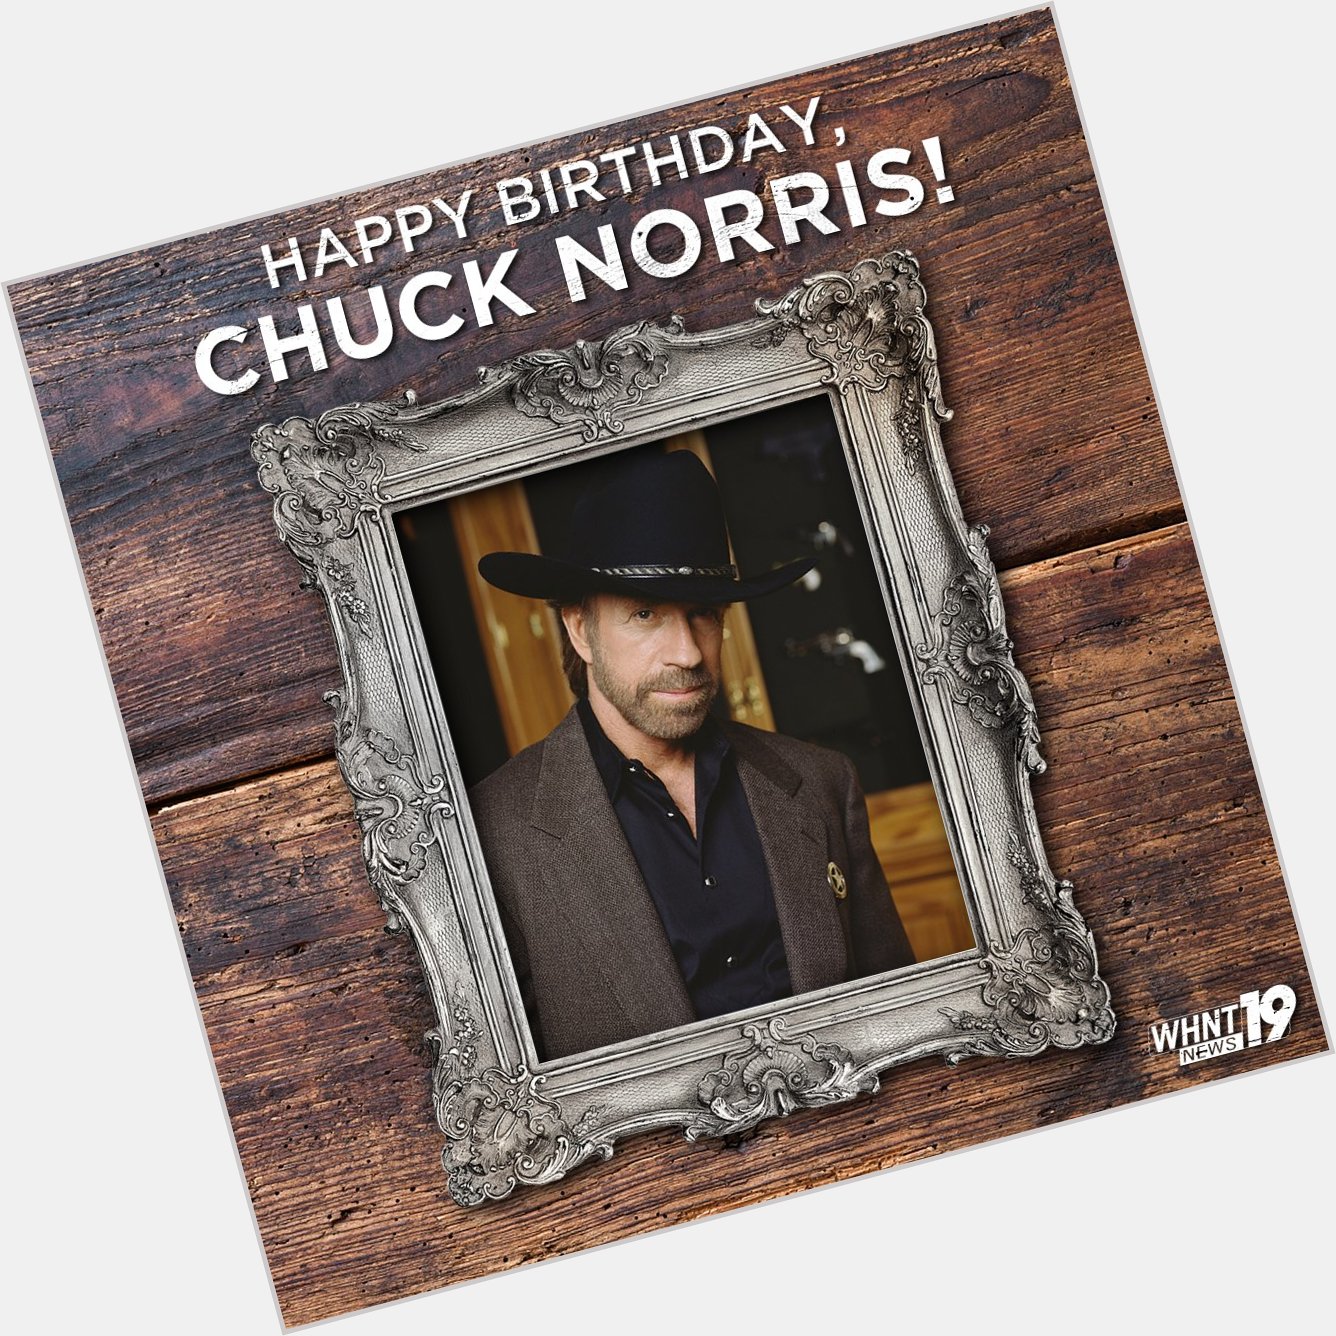 Happy 80th Birthday, Chuck Norris! 